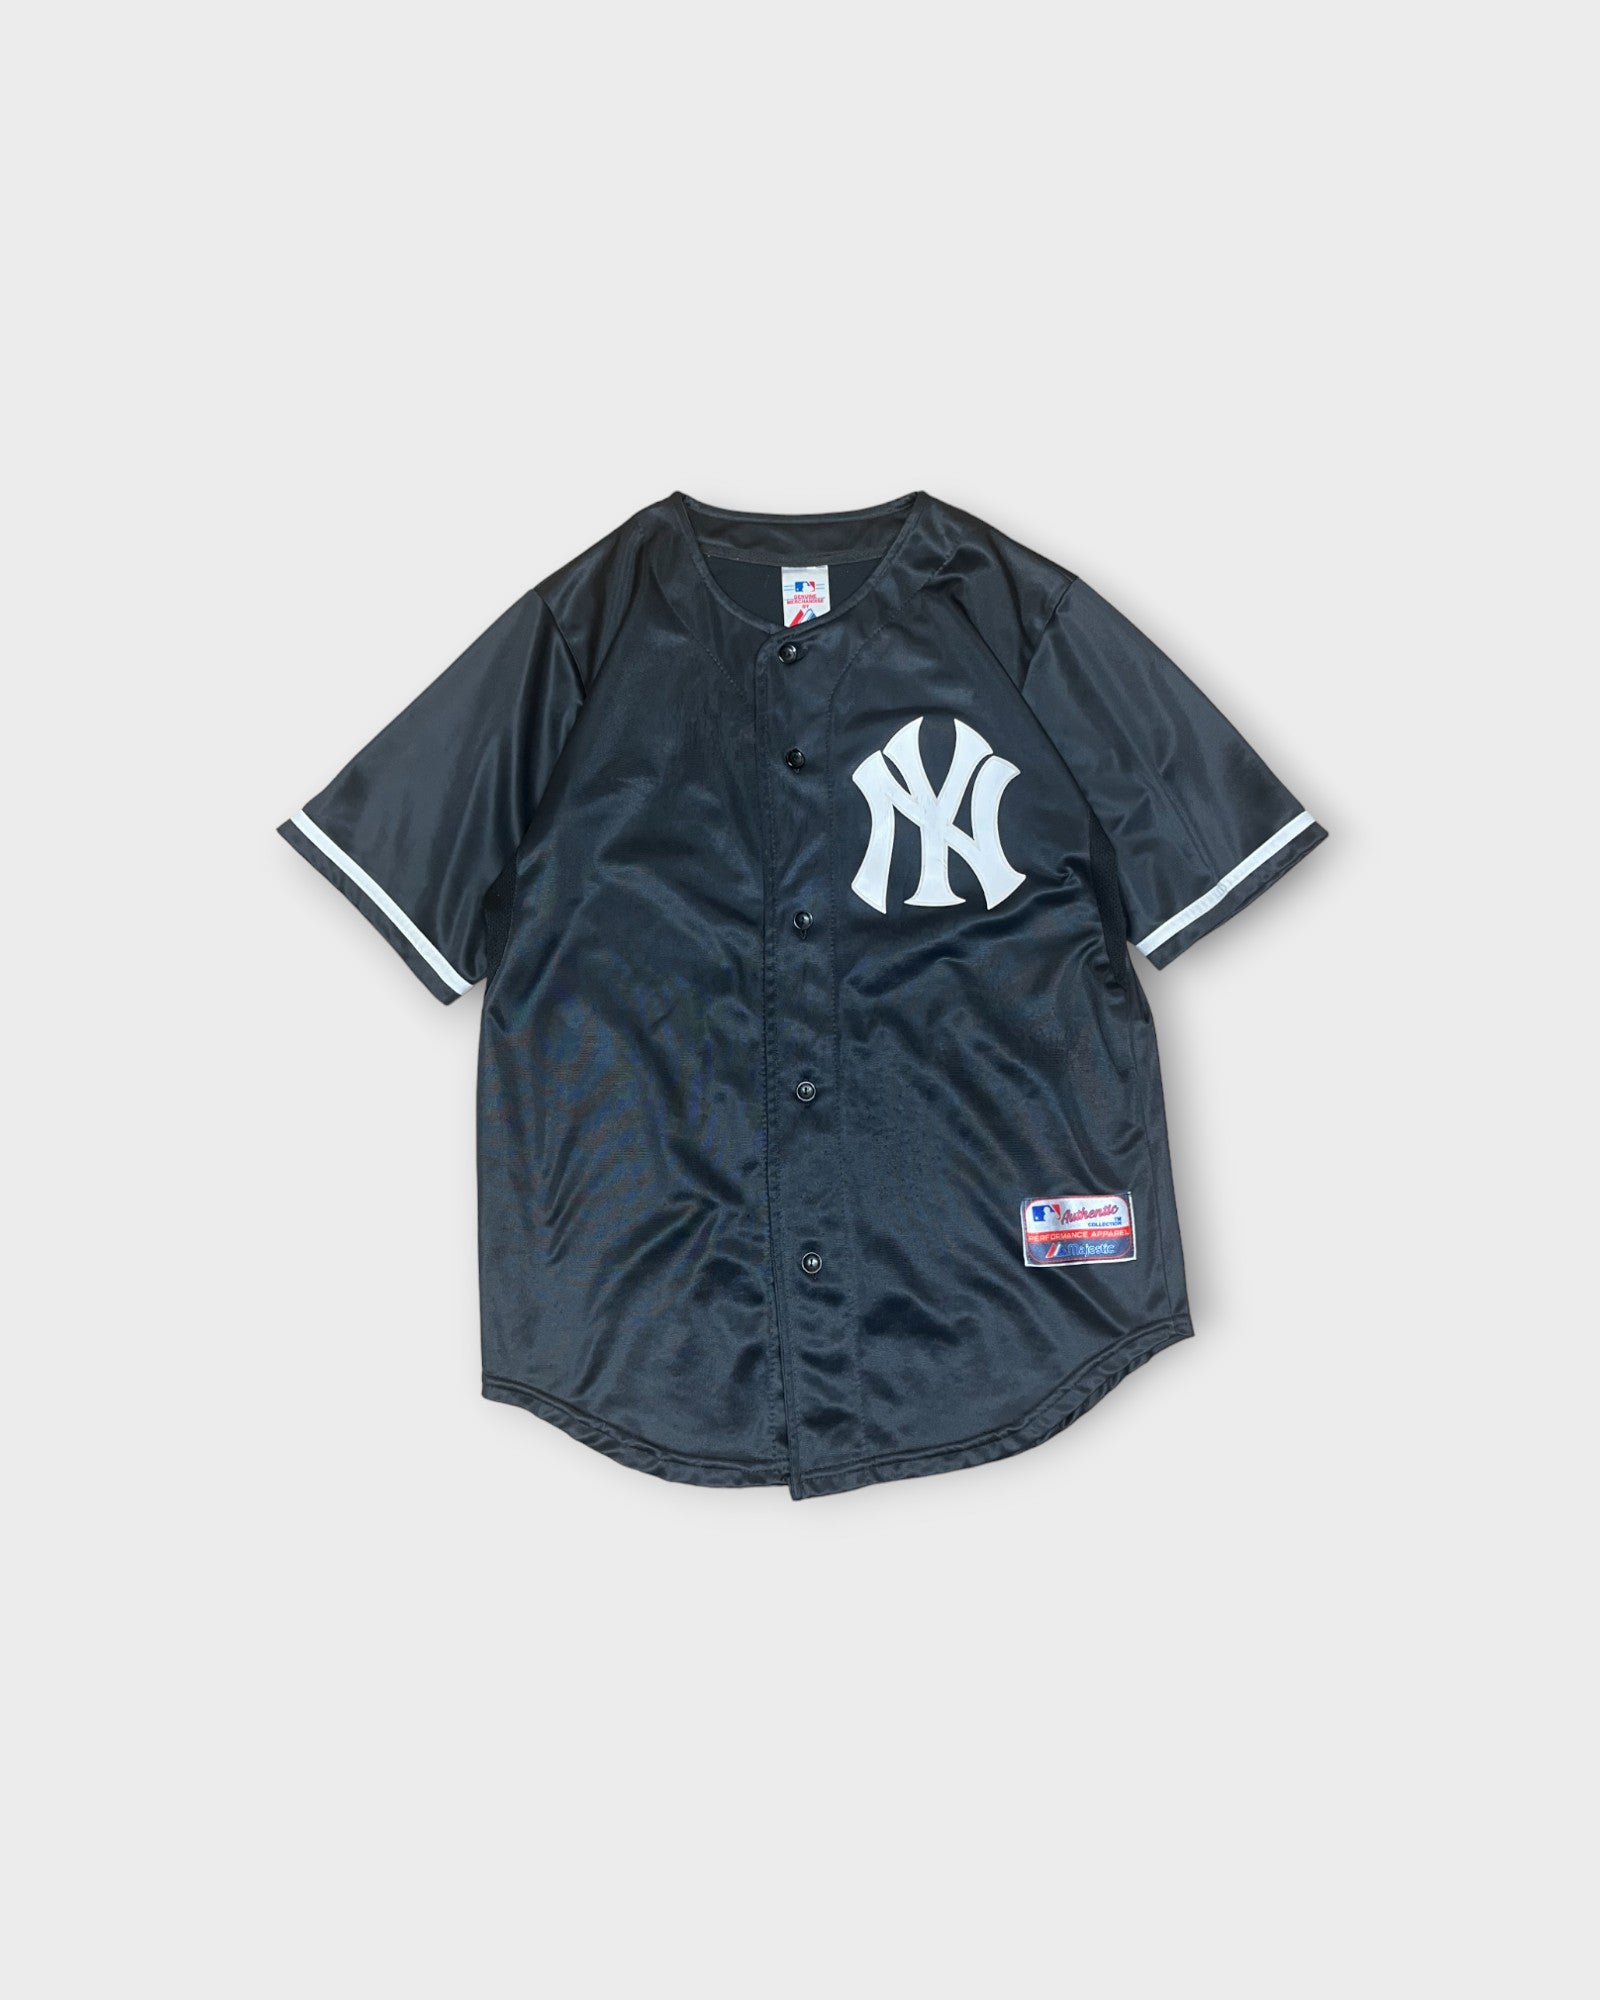 Vintage Majestic New York Yankees Sports Jersey - M